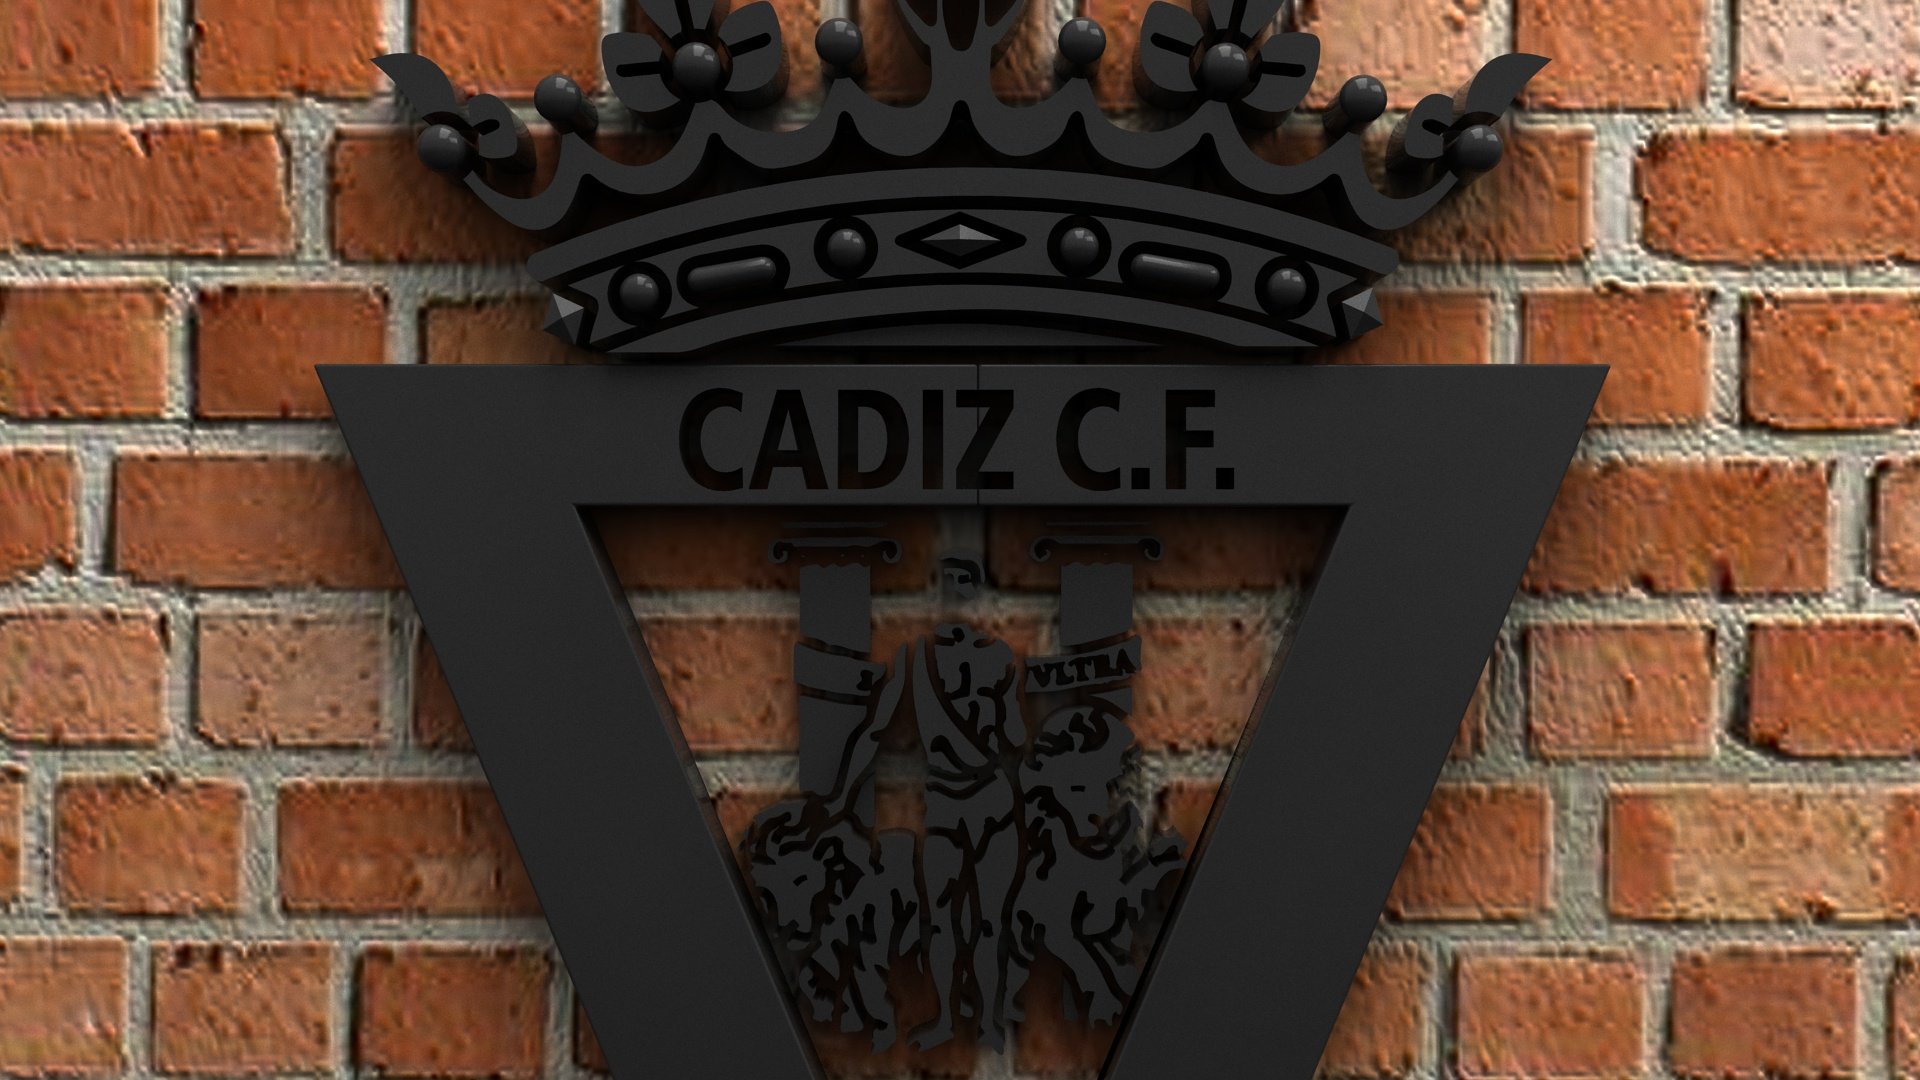 Cadiz Cf Wallpapers